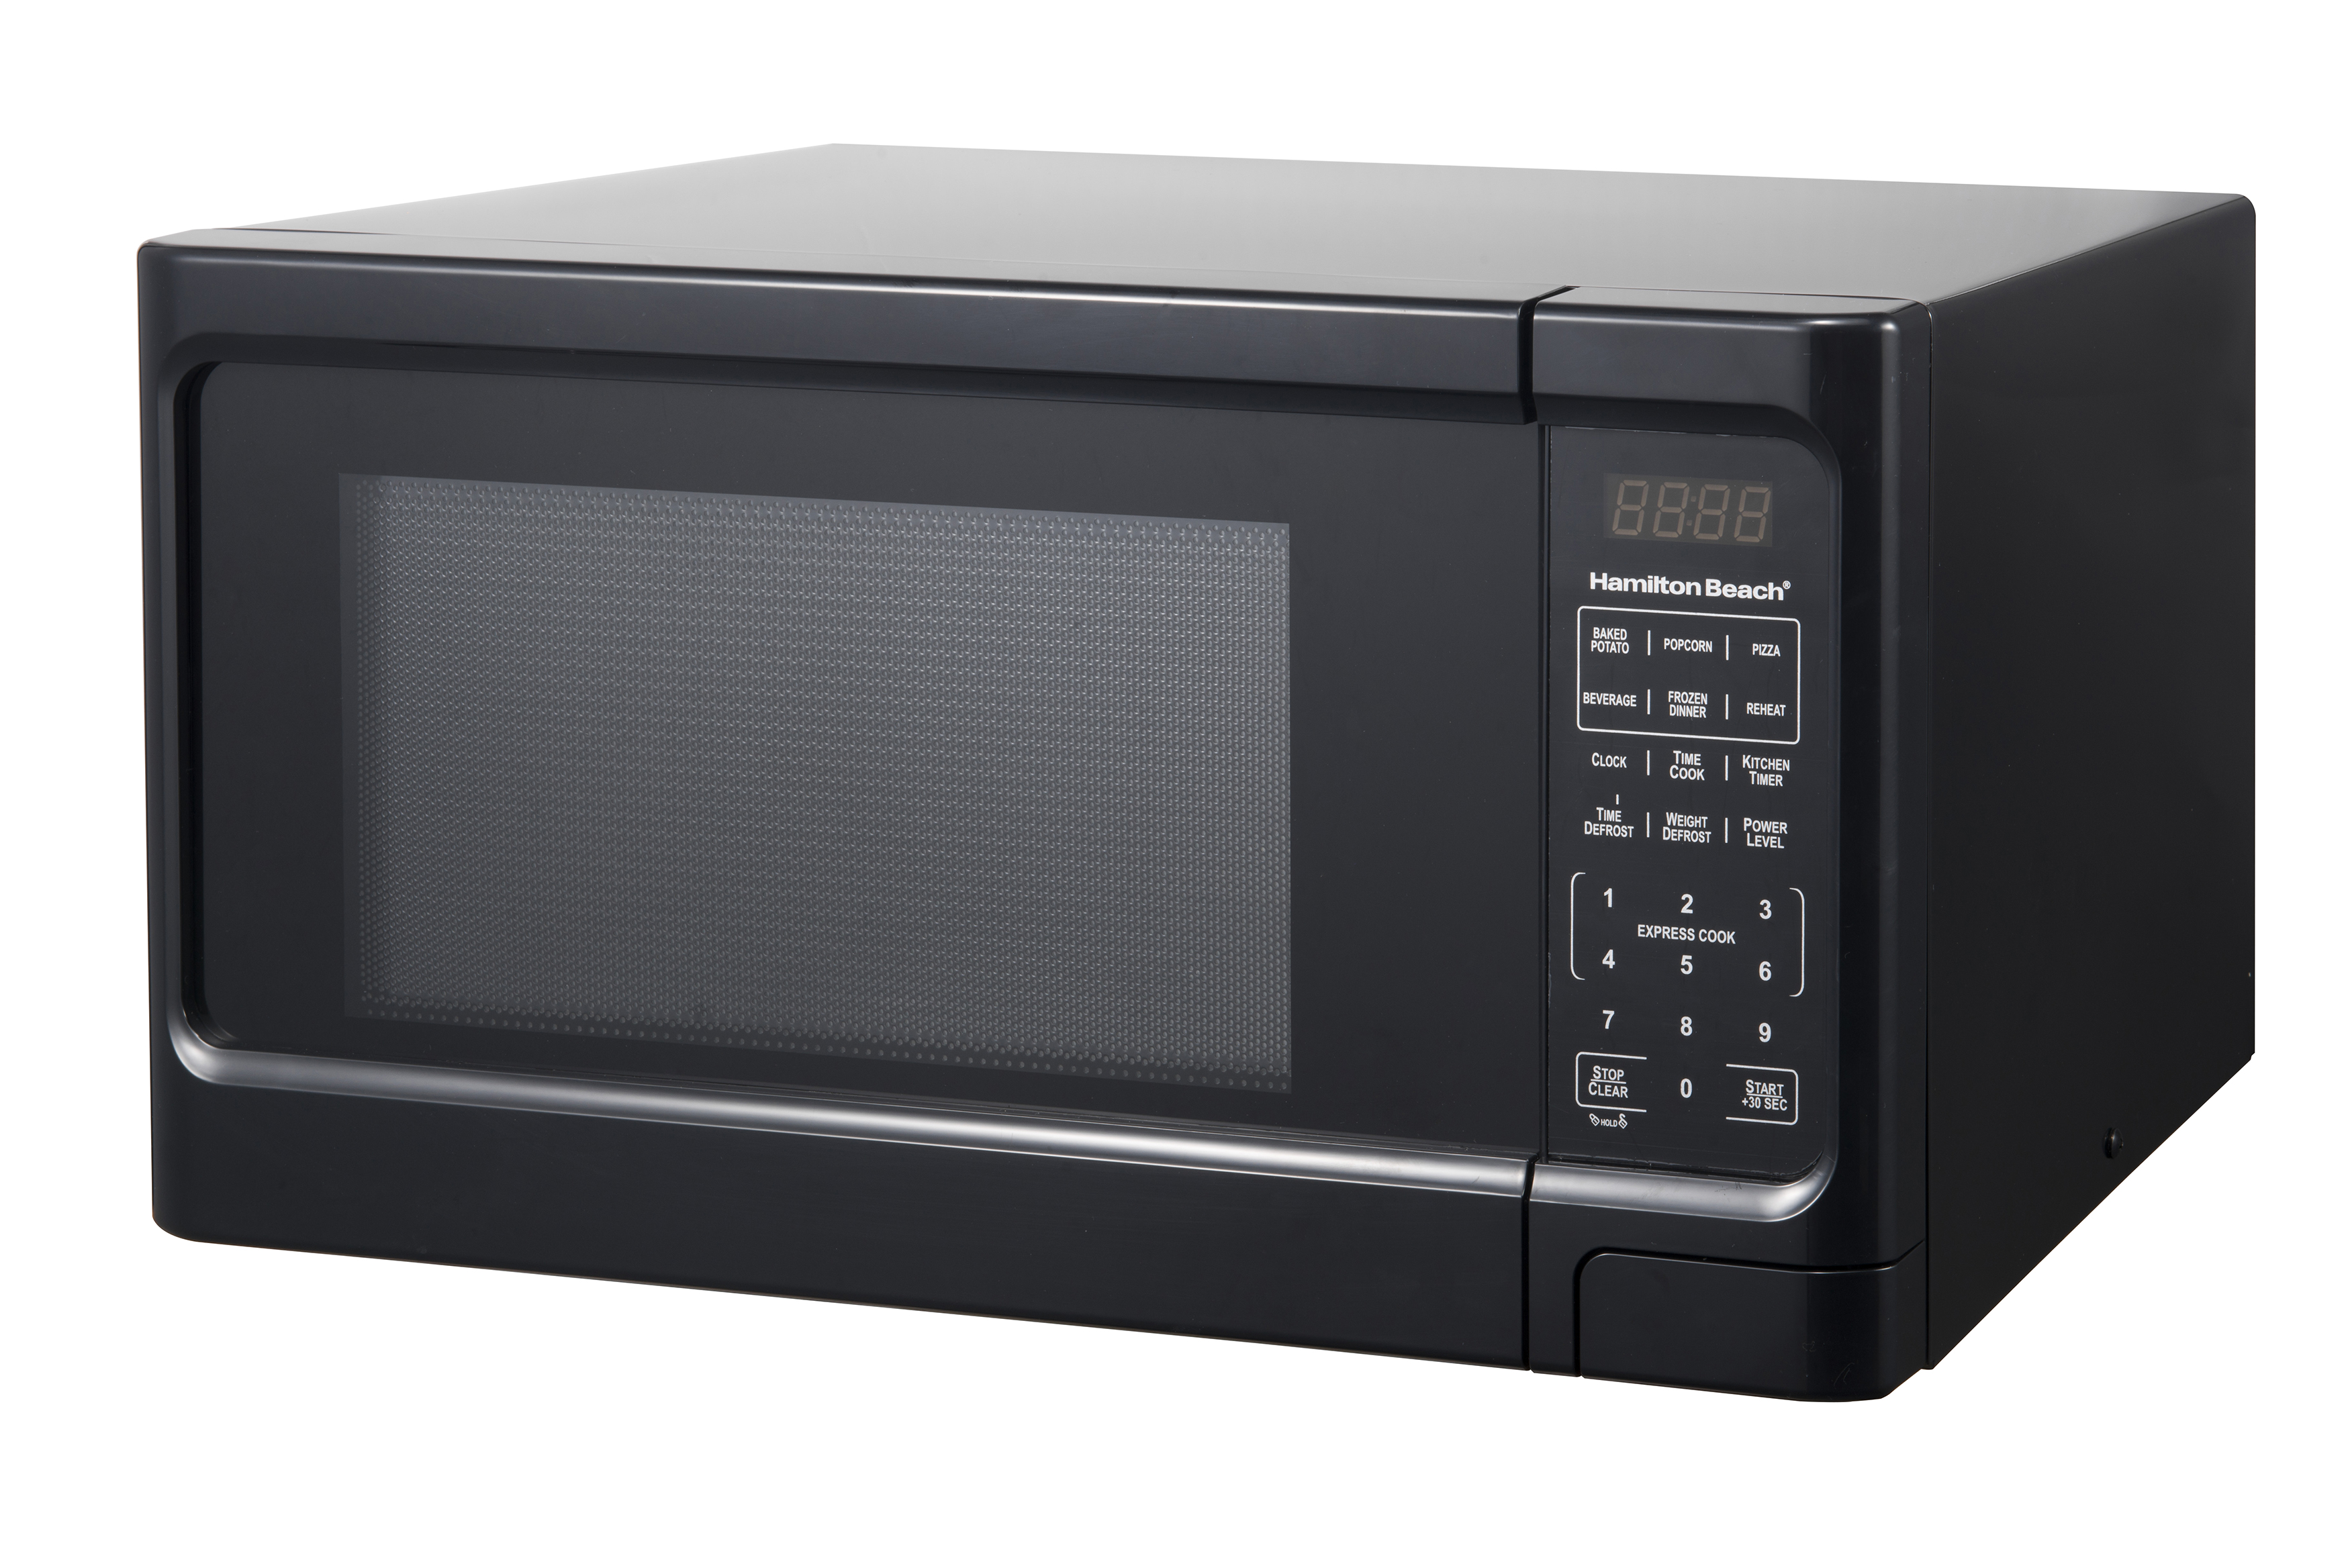 Hamilton Beach 1.1 cu. ft. Countertop Microwave Oven, 1000 Watts, Black - image 2 of 9